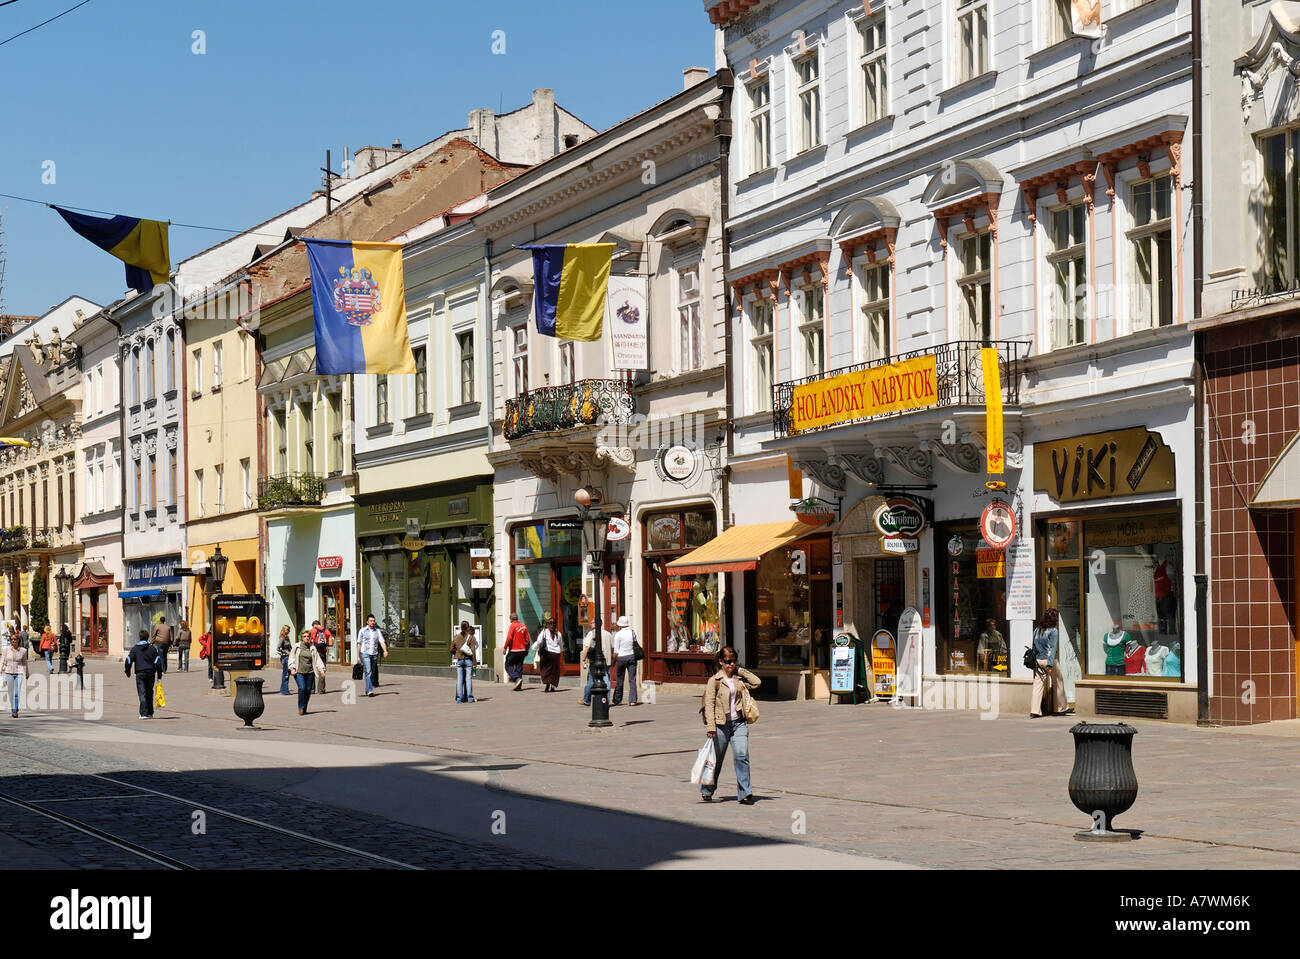 Historic old town of Kosice, Slovakia Stock Photo - Alamy